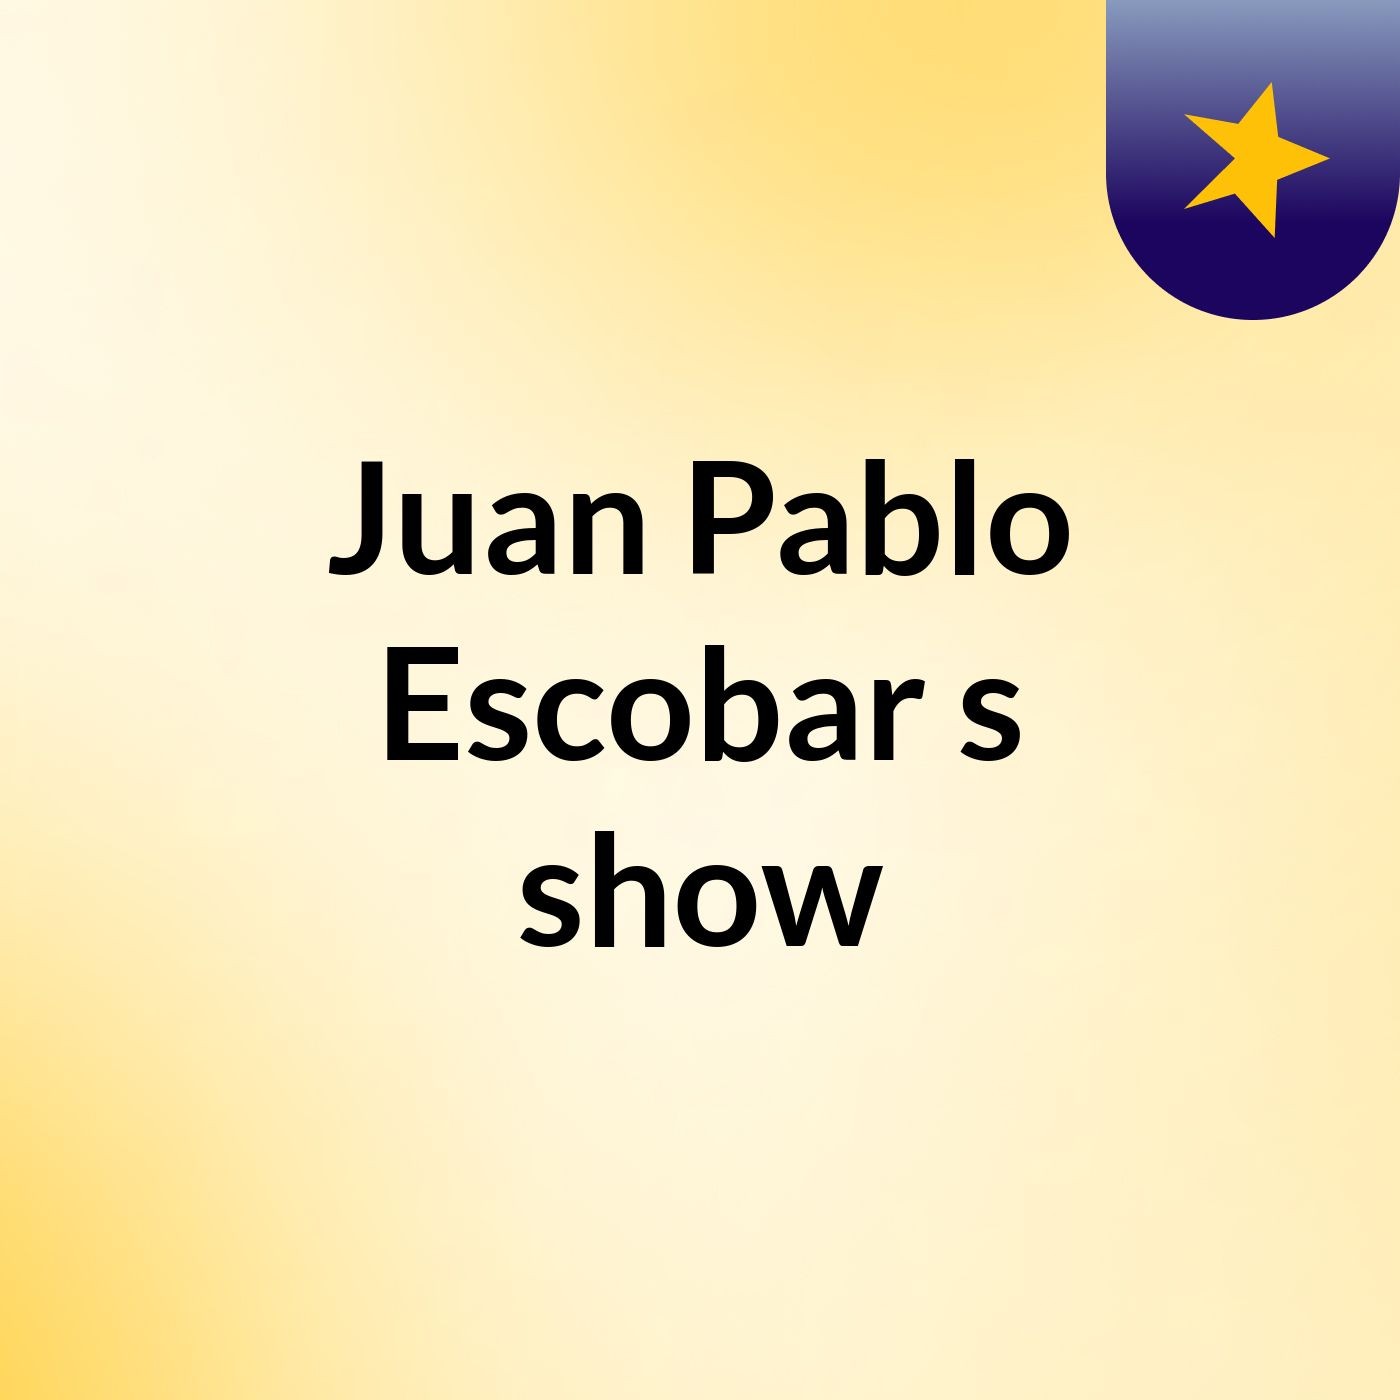 Juan Pablo Escobar's show